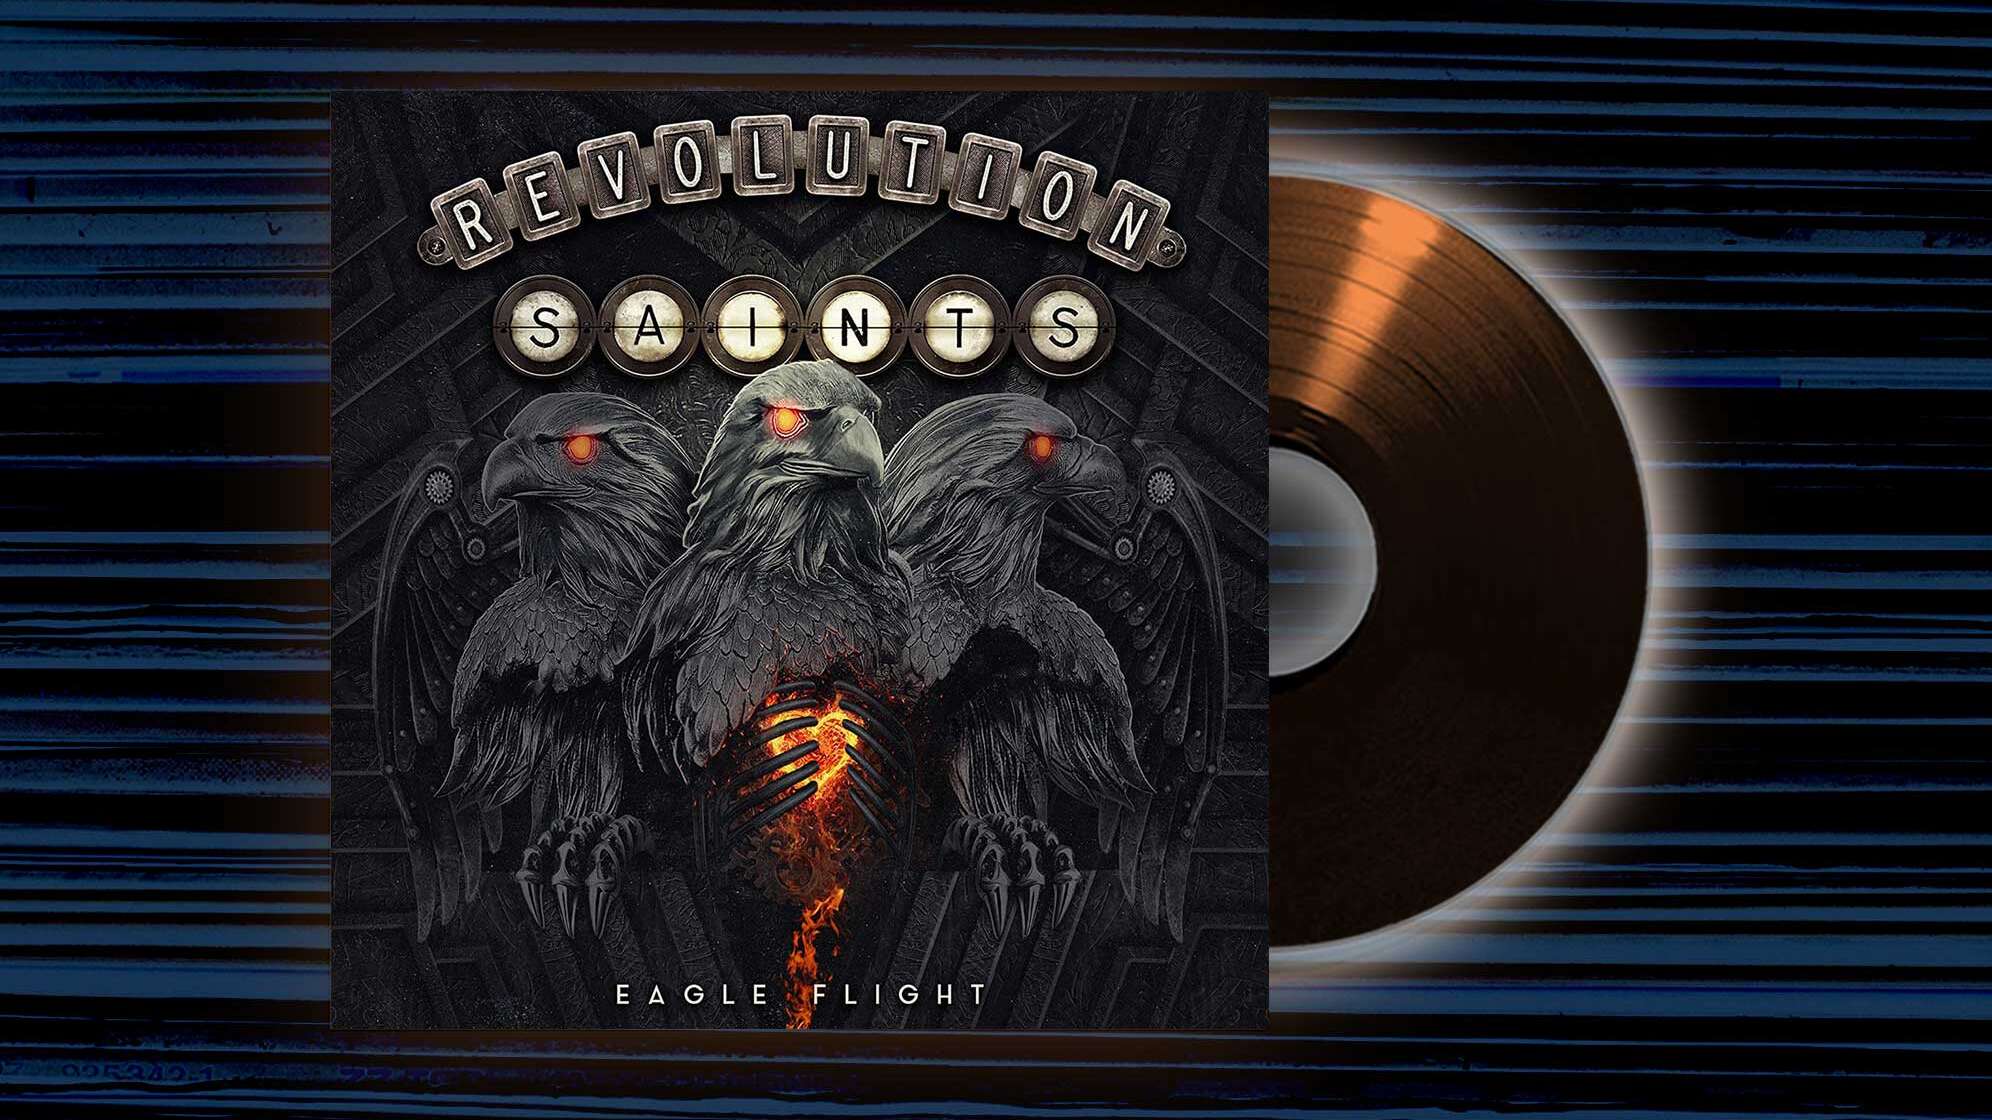 Albumcover von den Revolution Saints: "Eagles Flight"